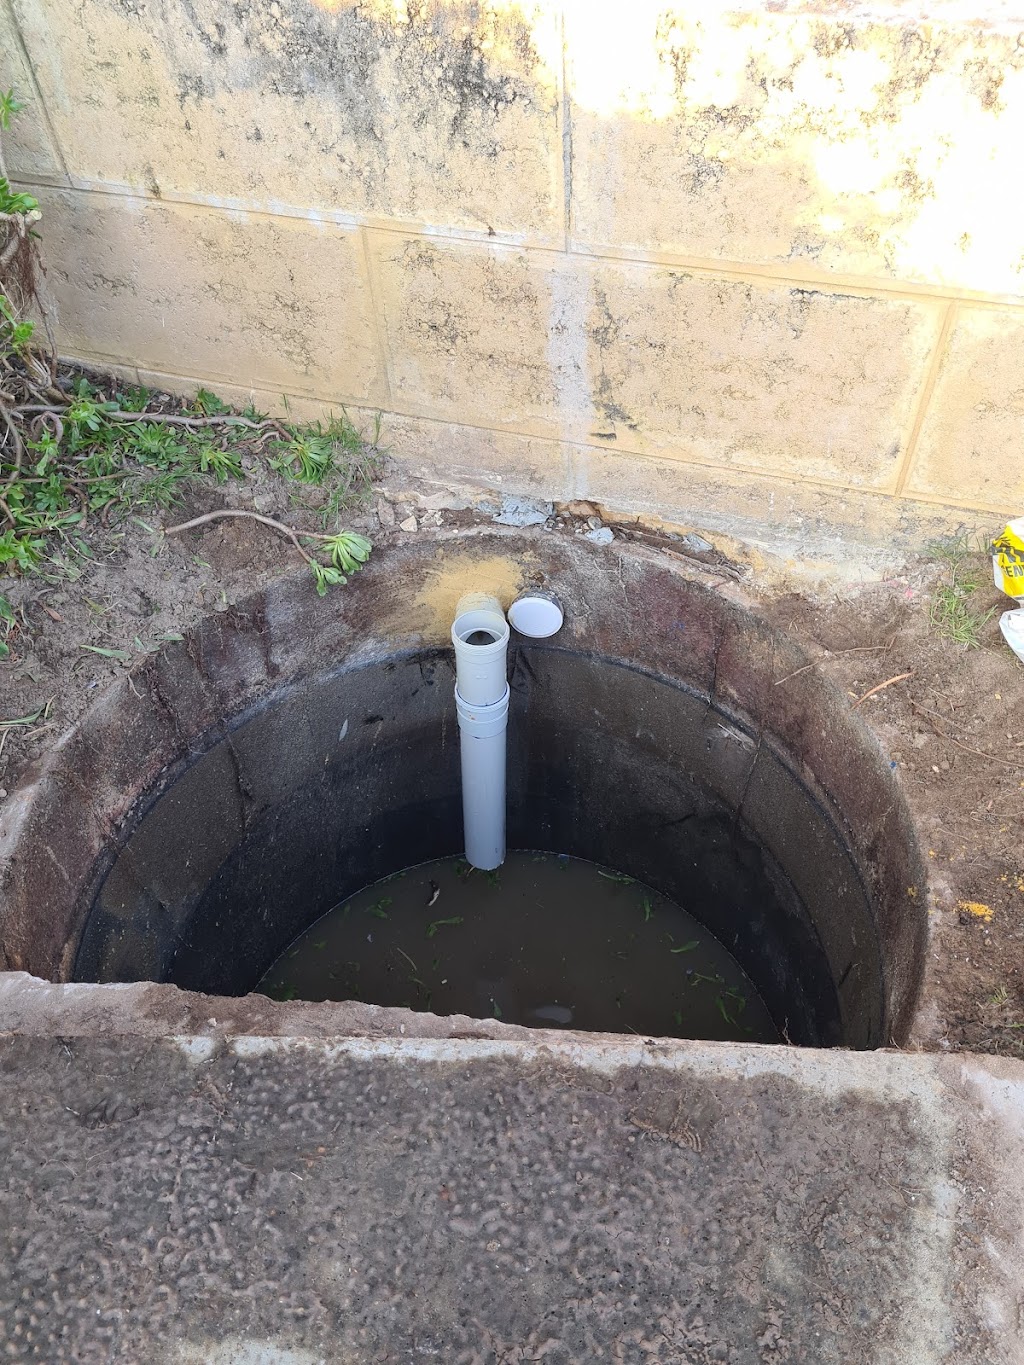 Whitewater Plumbing Services | 37 Cornwallis Rd, Madora Bay WA 6210, Australia | Phone: 0435 067 843